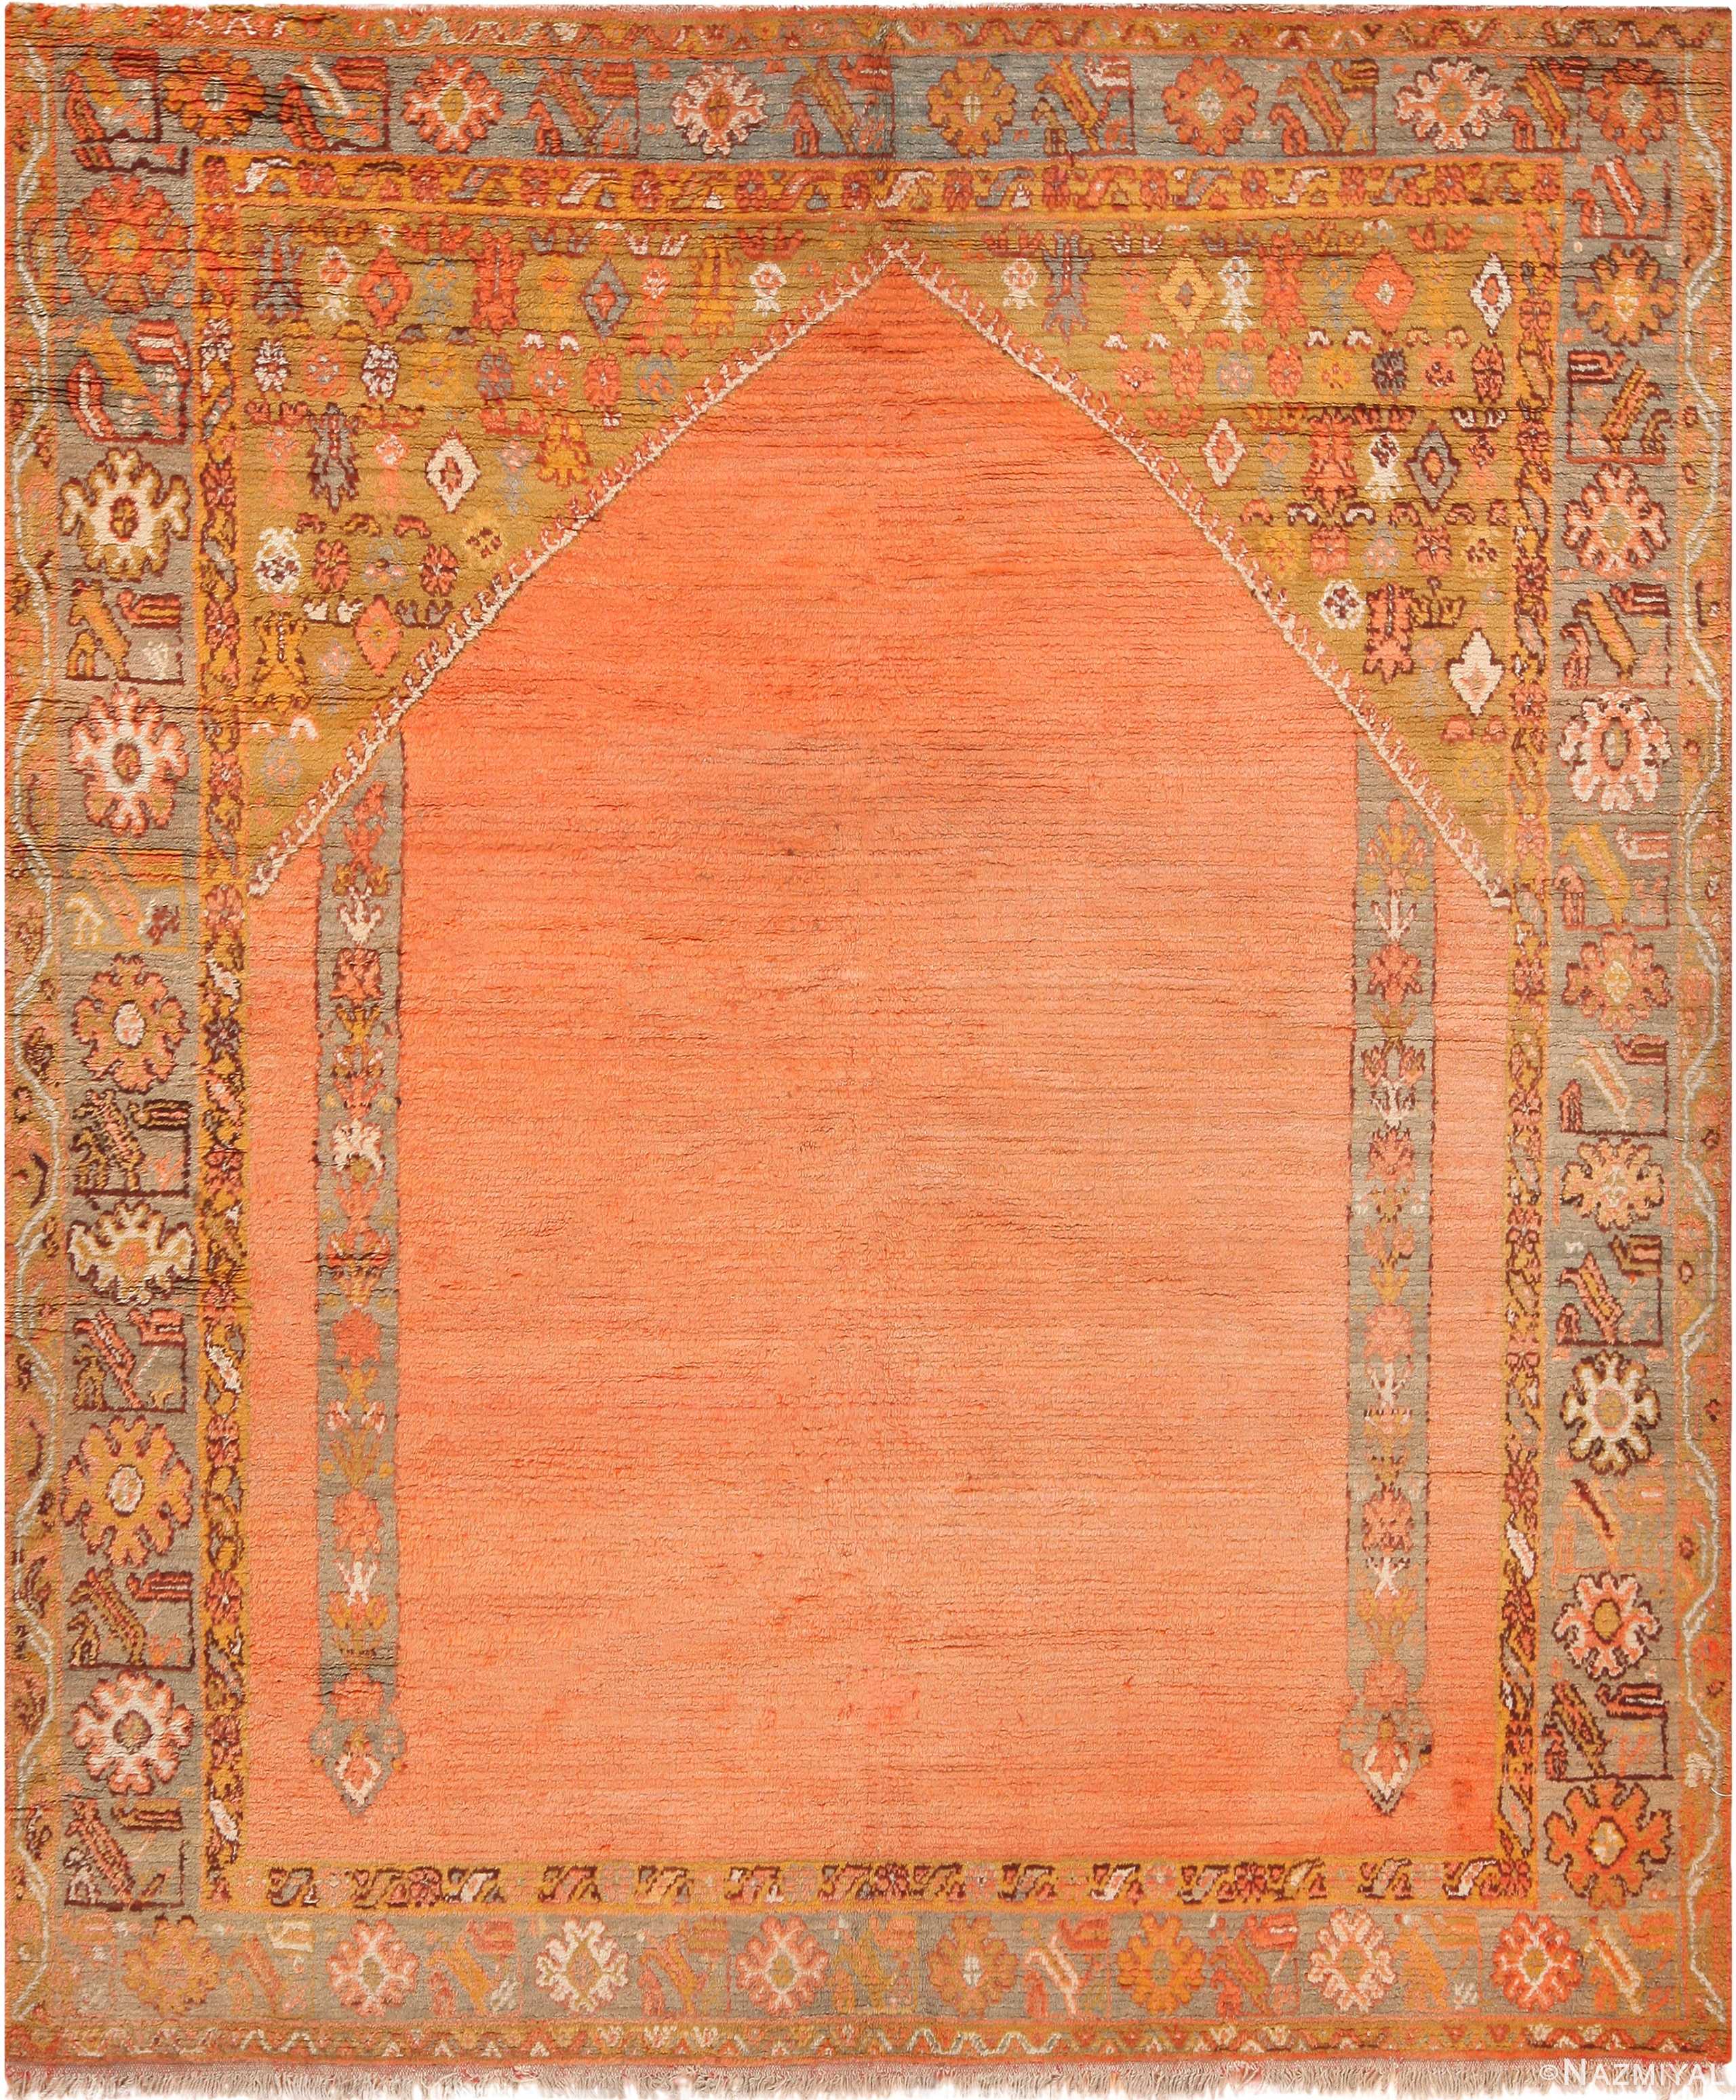 Antique Turkish Oushak Prayer Rug 71110 by Nazmiyal Antique Rugs